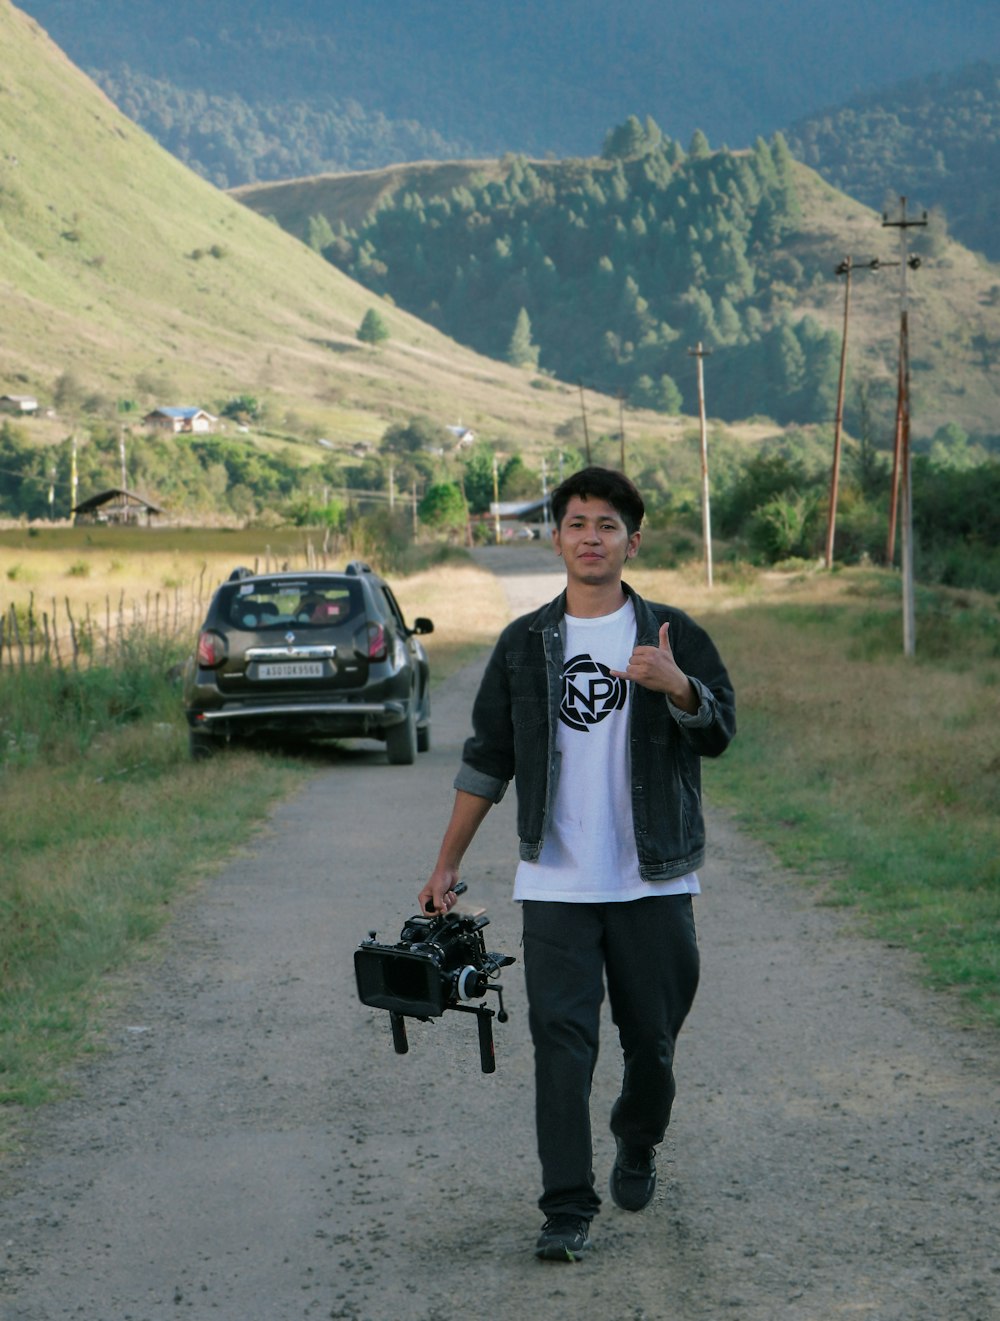 a man walking down a dirt road holding a camera